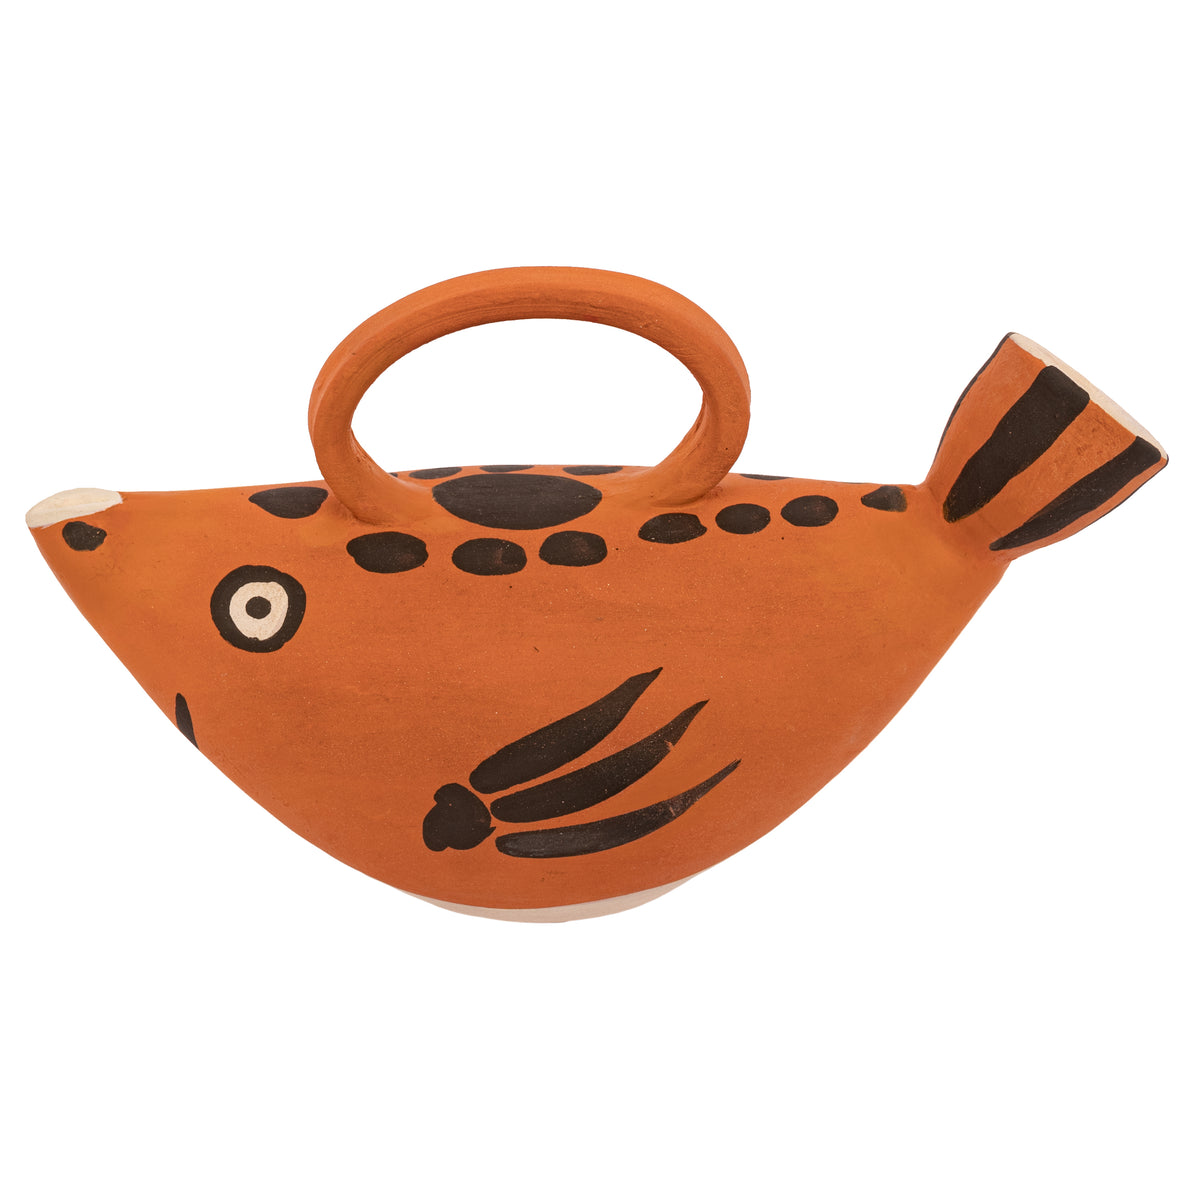 Pablo Picasso Terracotta Fish Pitcher Madoura Pottery Sujet Poisson France, 1952